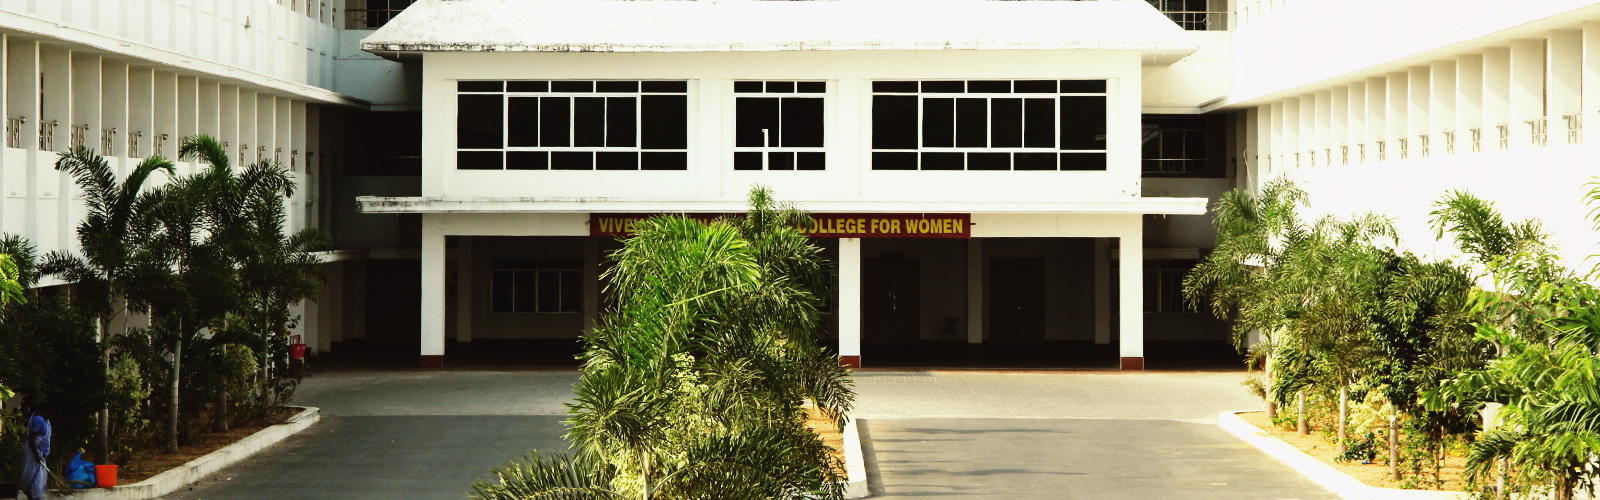 Vivekananda Nursing College For Women - Veerachipalayam, Salem